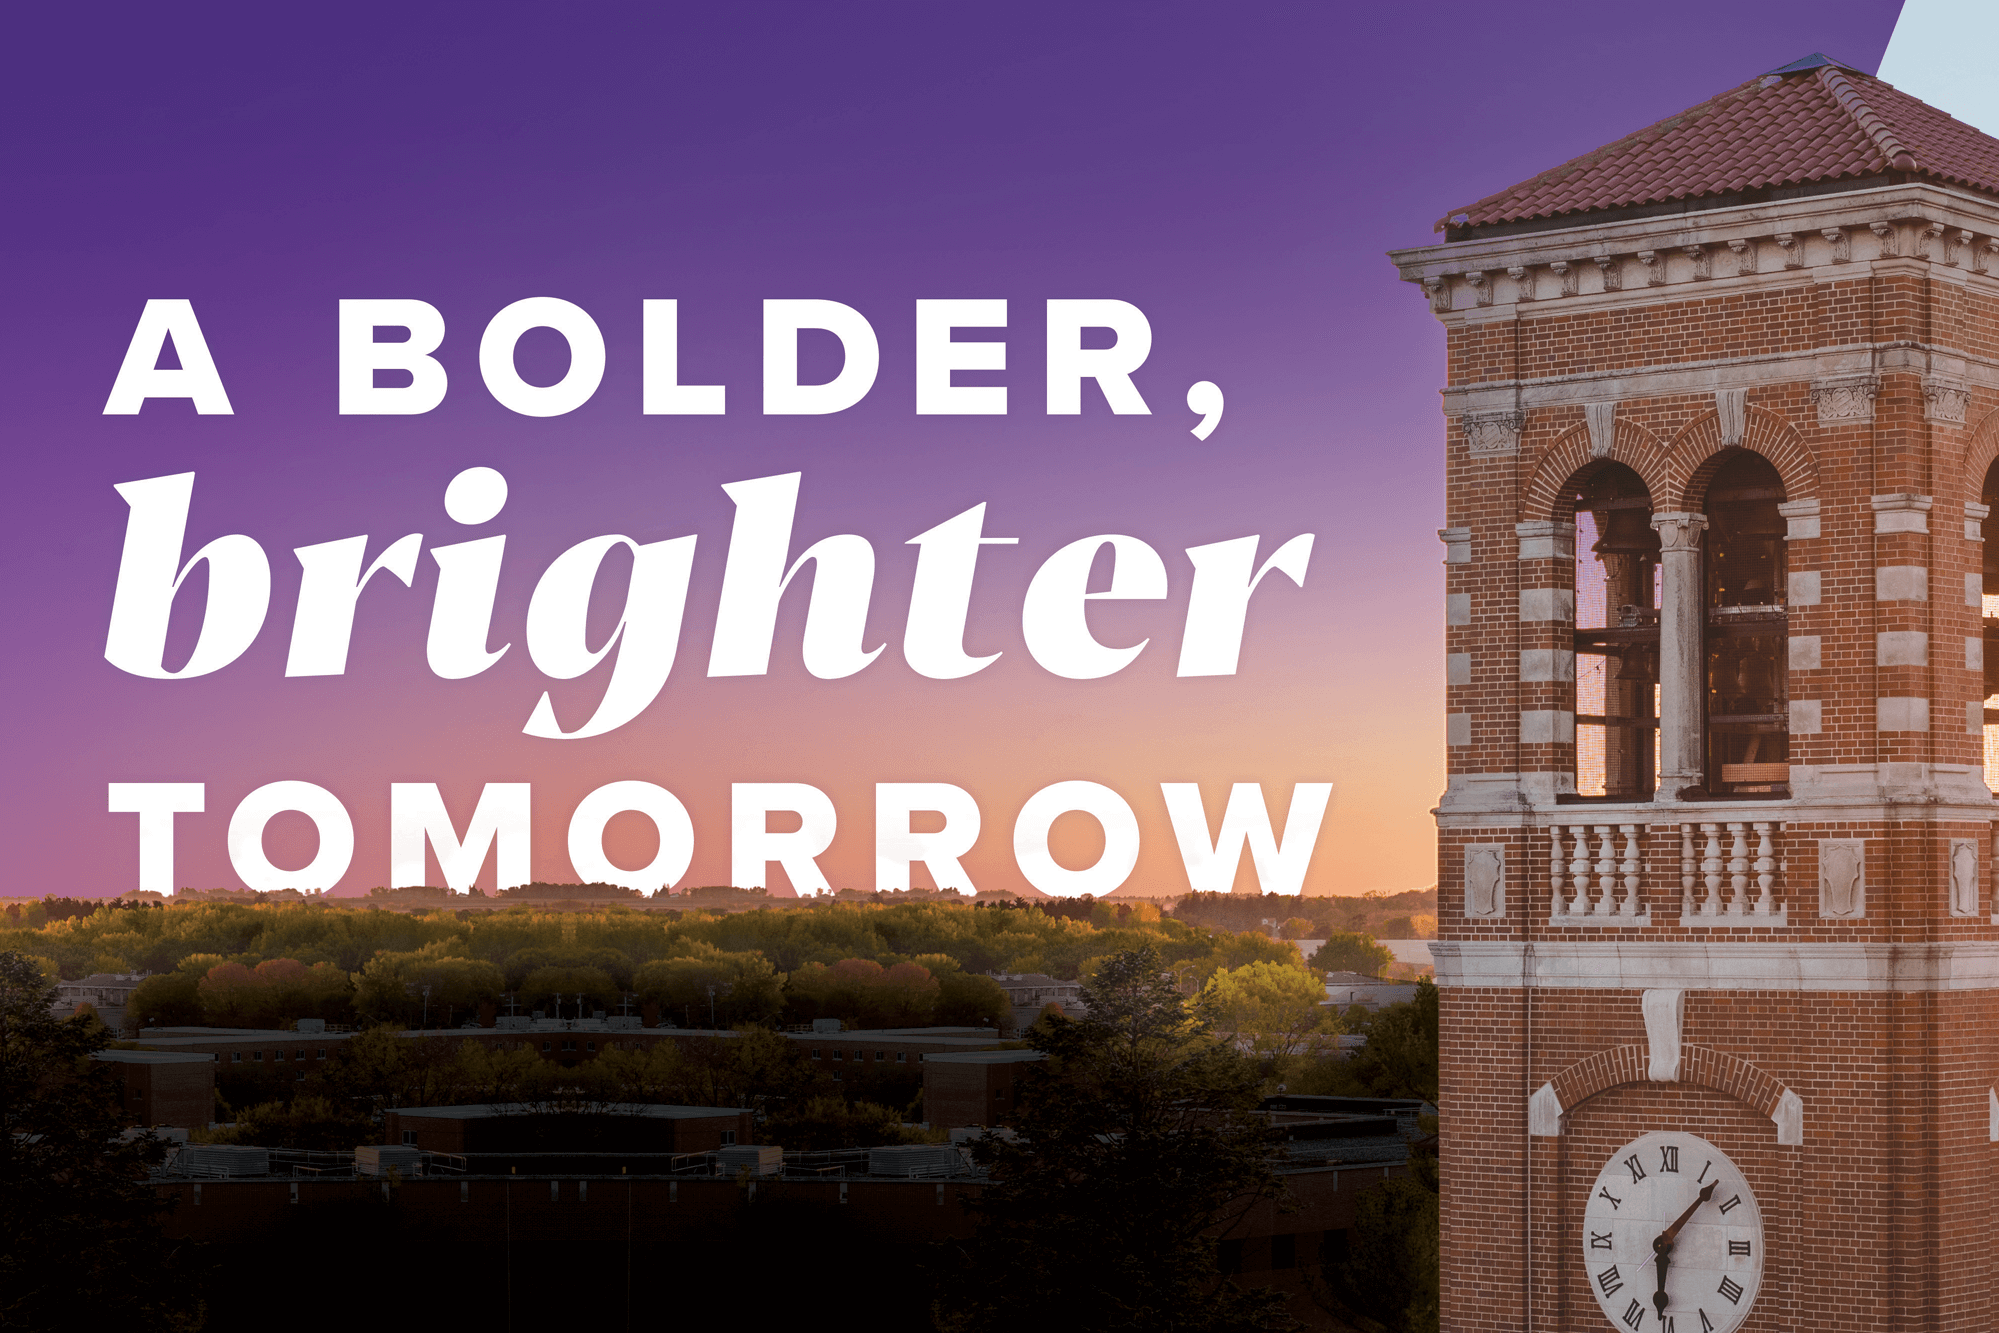 A bolder, brighter tomorrow